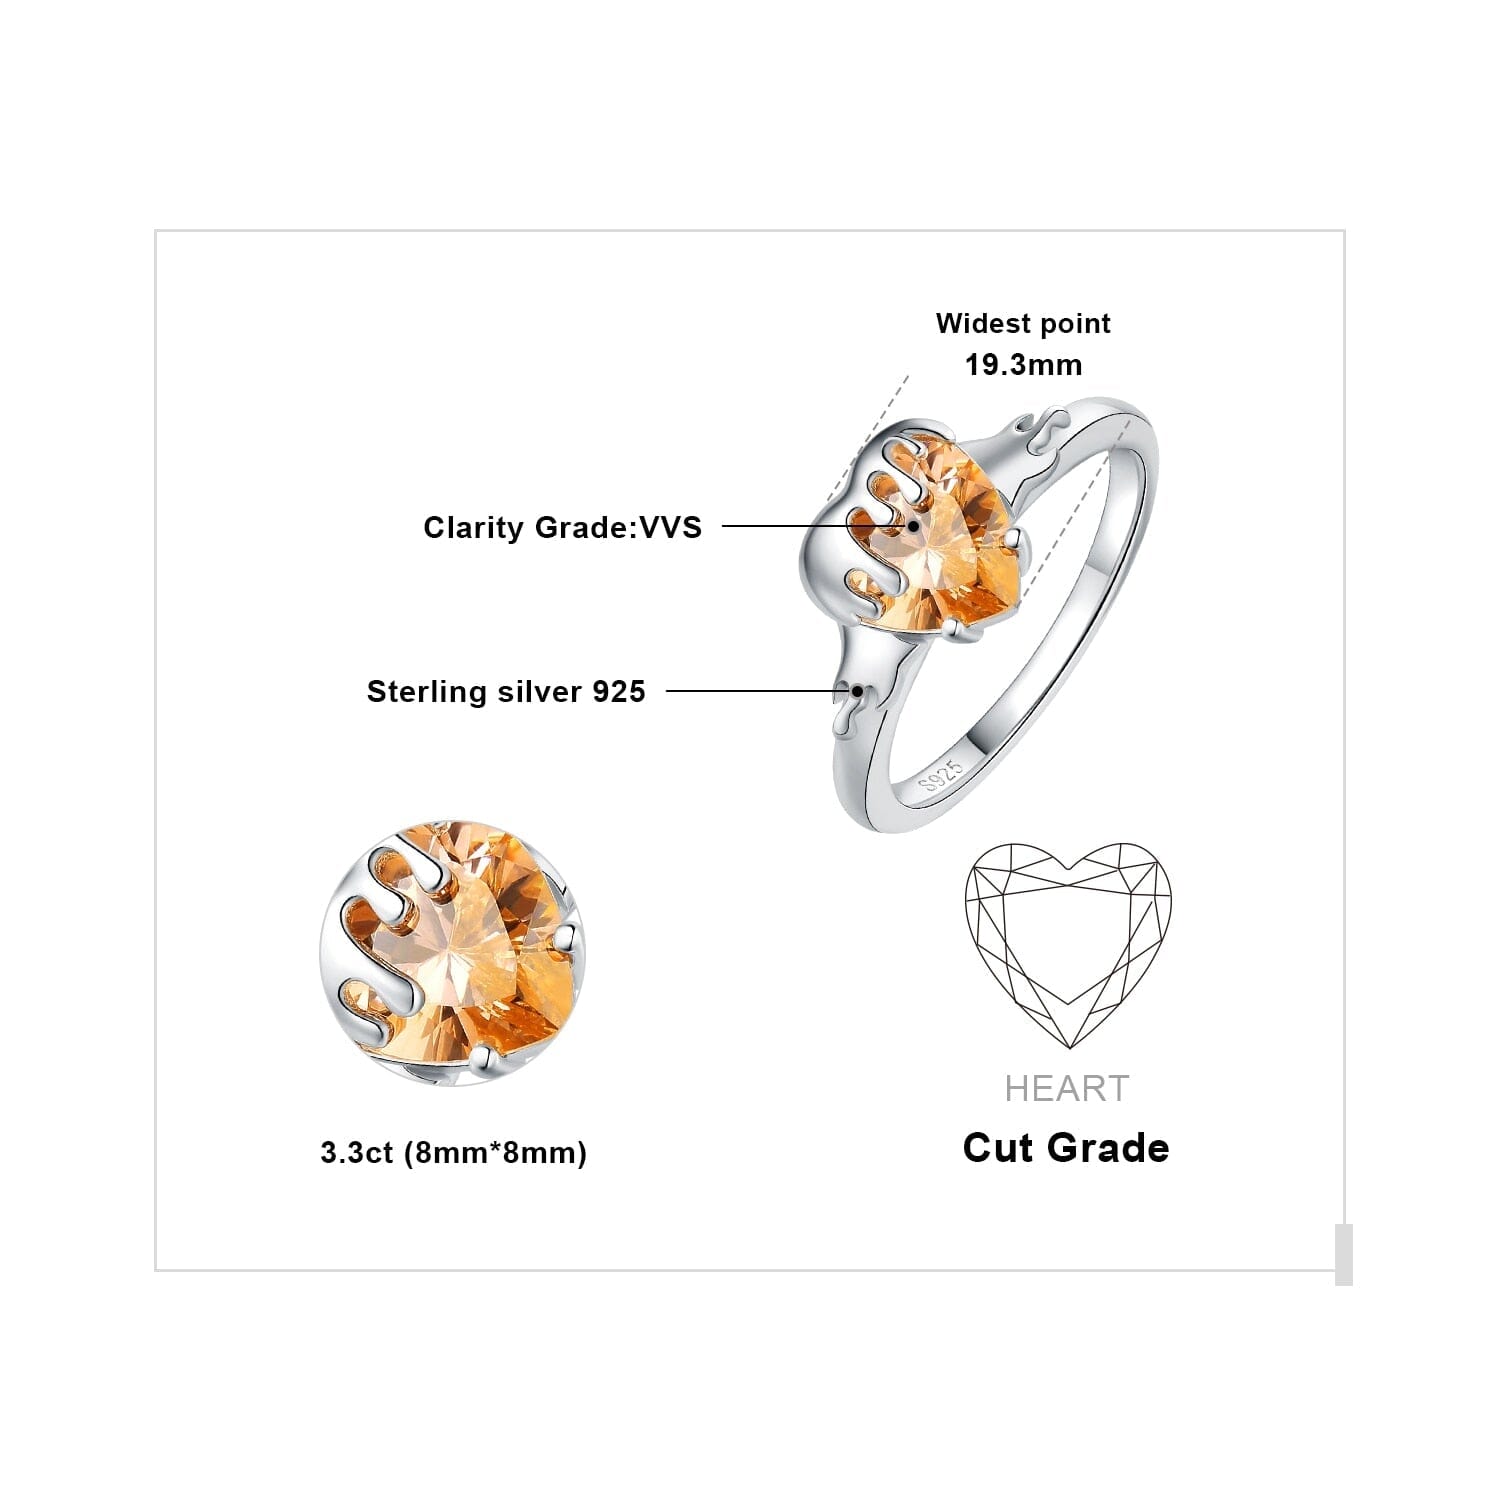 Honey Heart 3.3ct Morganite Gemstone Ring - 925 Sterling SilverRing